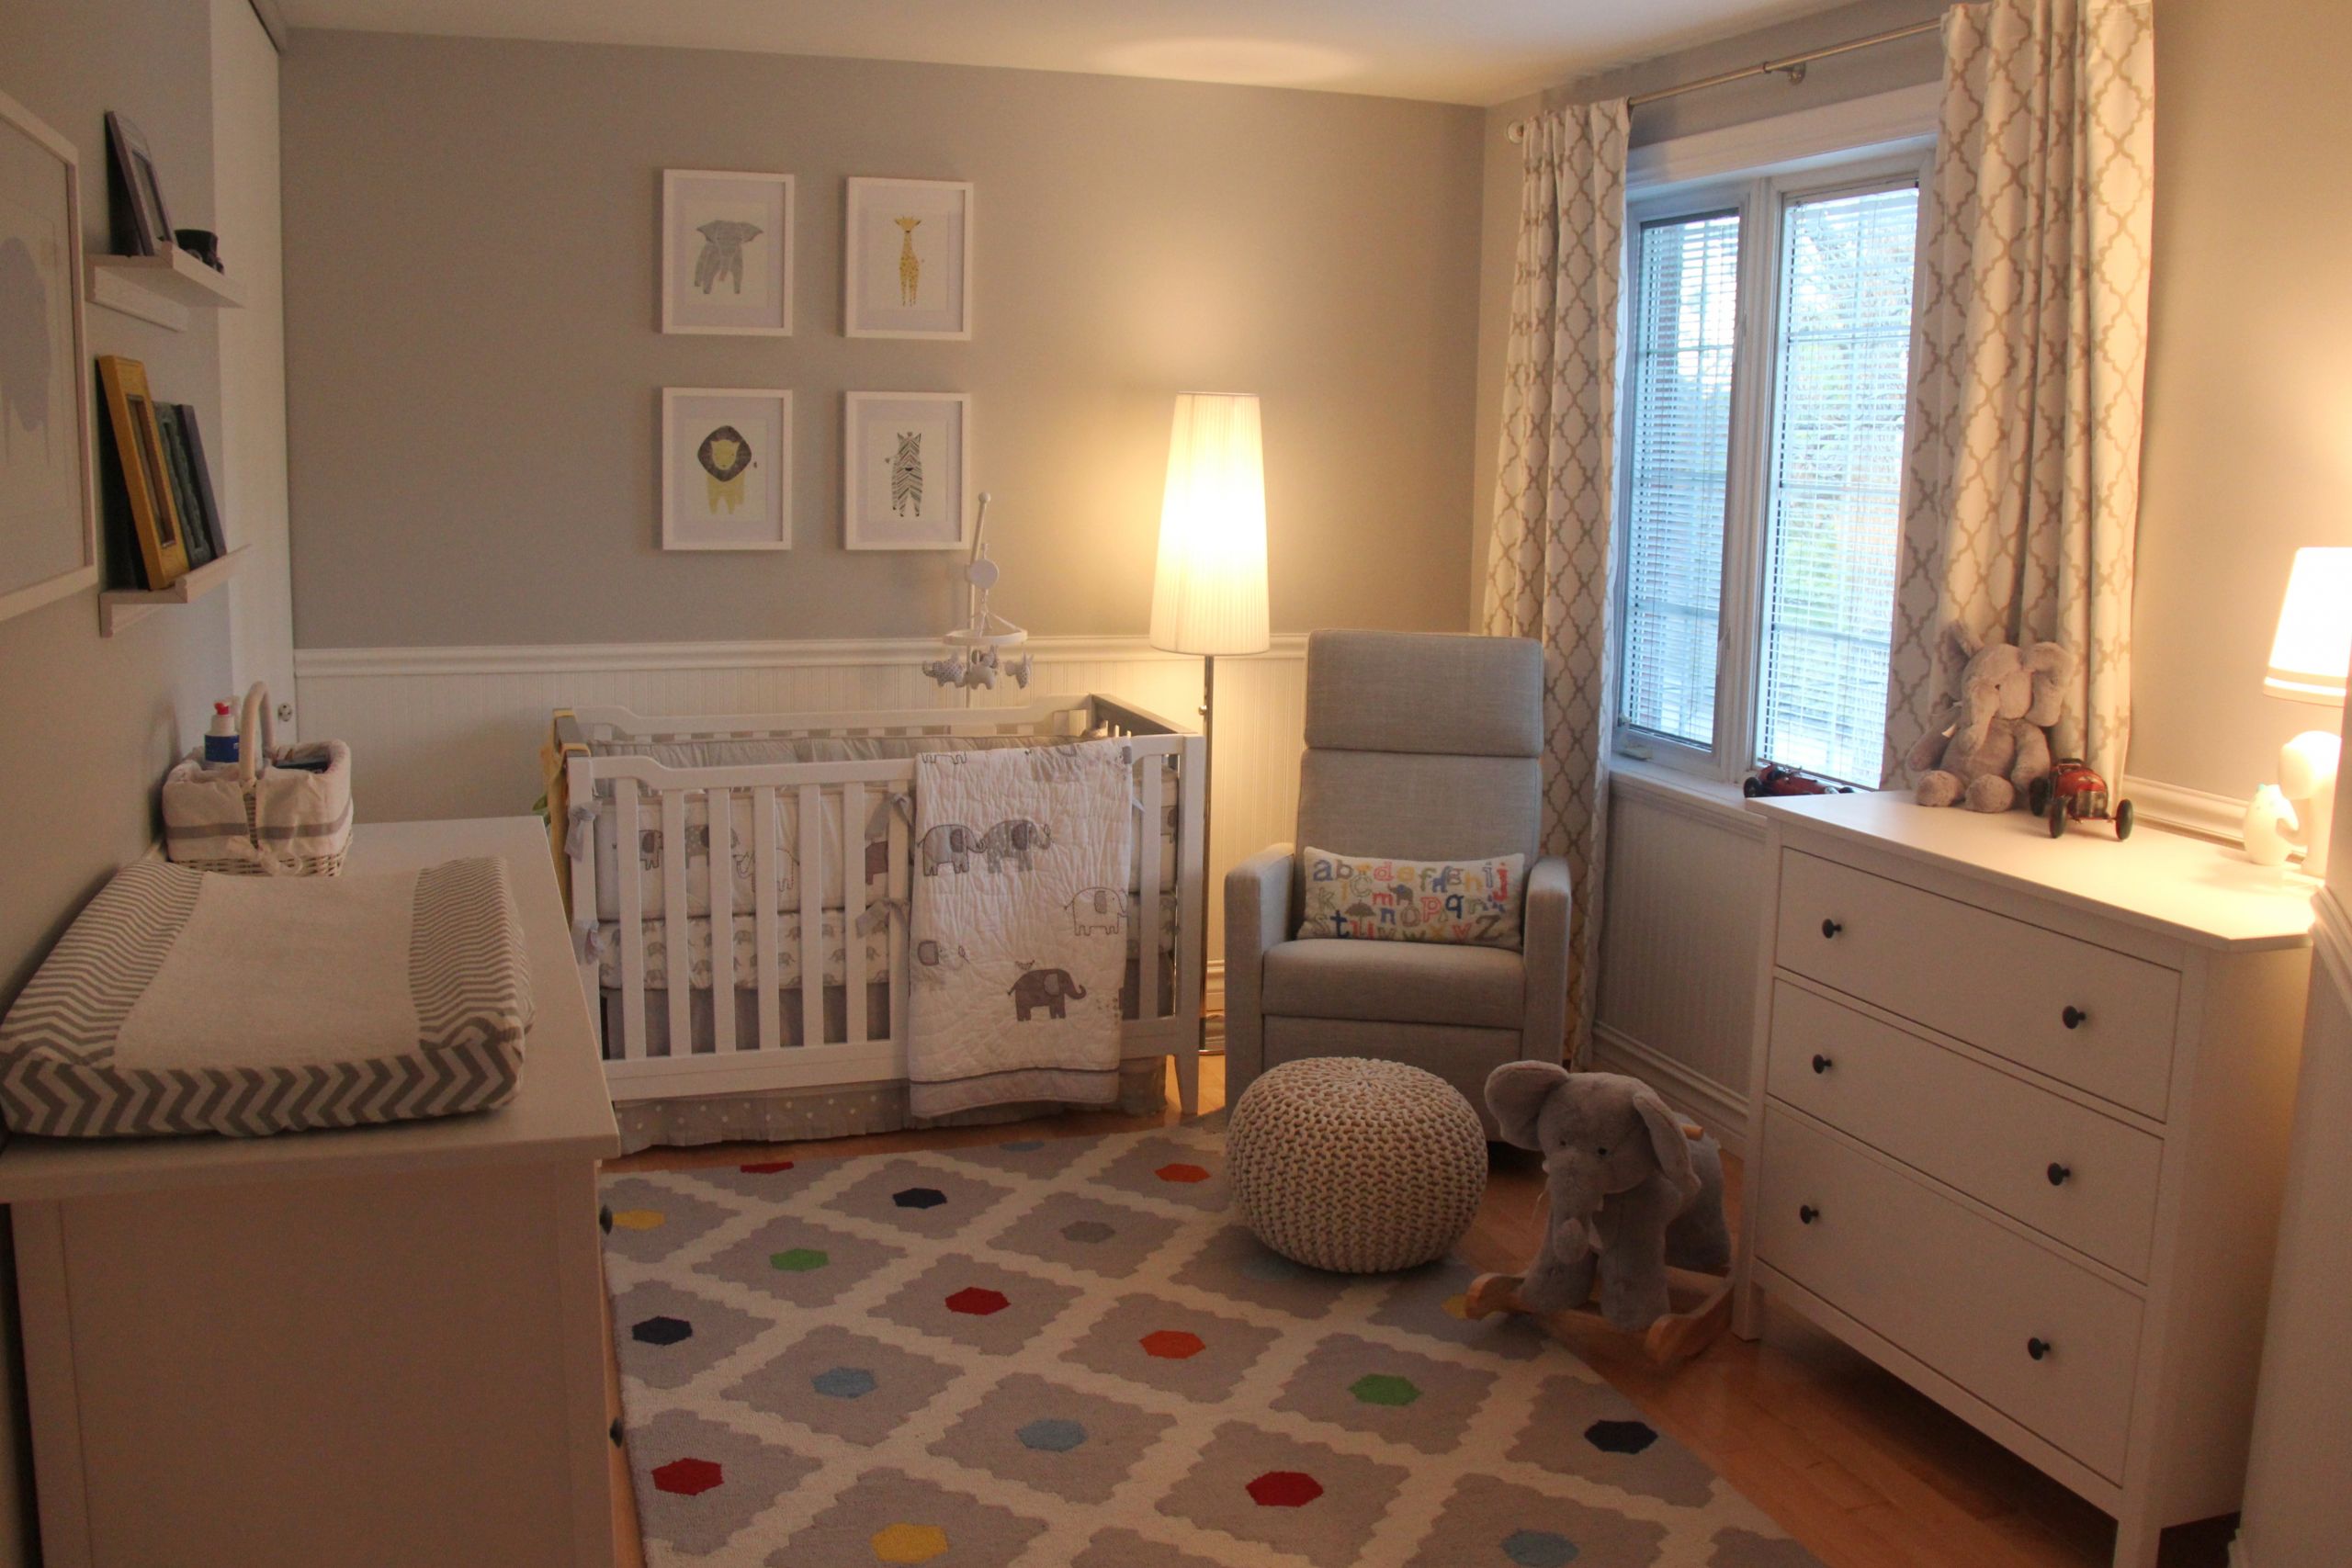 Newborn Baby Boy Room Decorating Ideas
 Our Little Baby Boy s Neutral Room Project Nursery